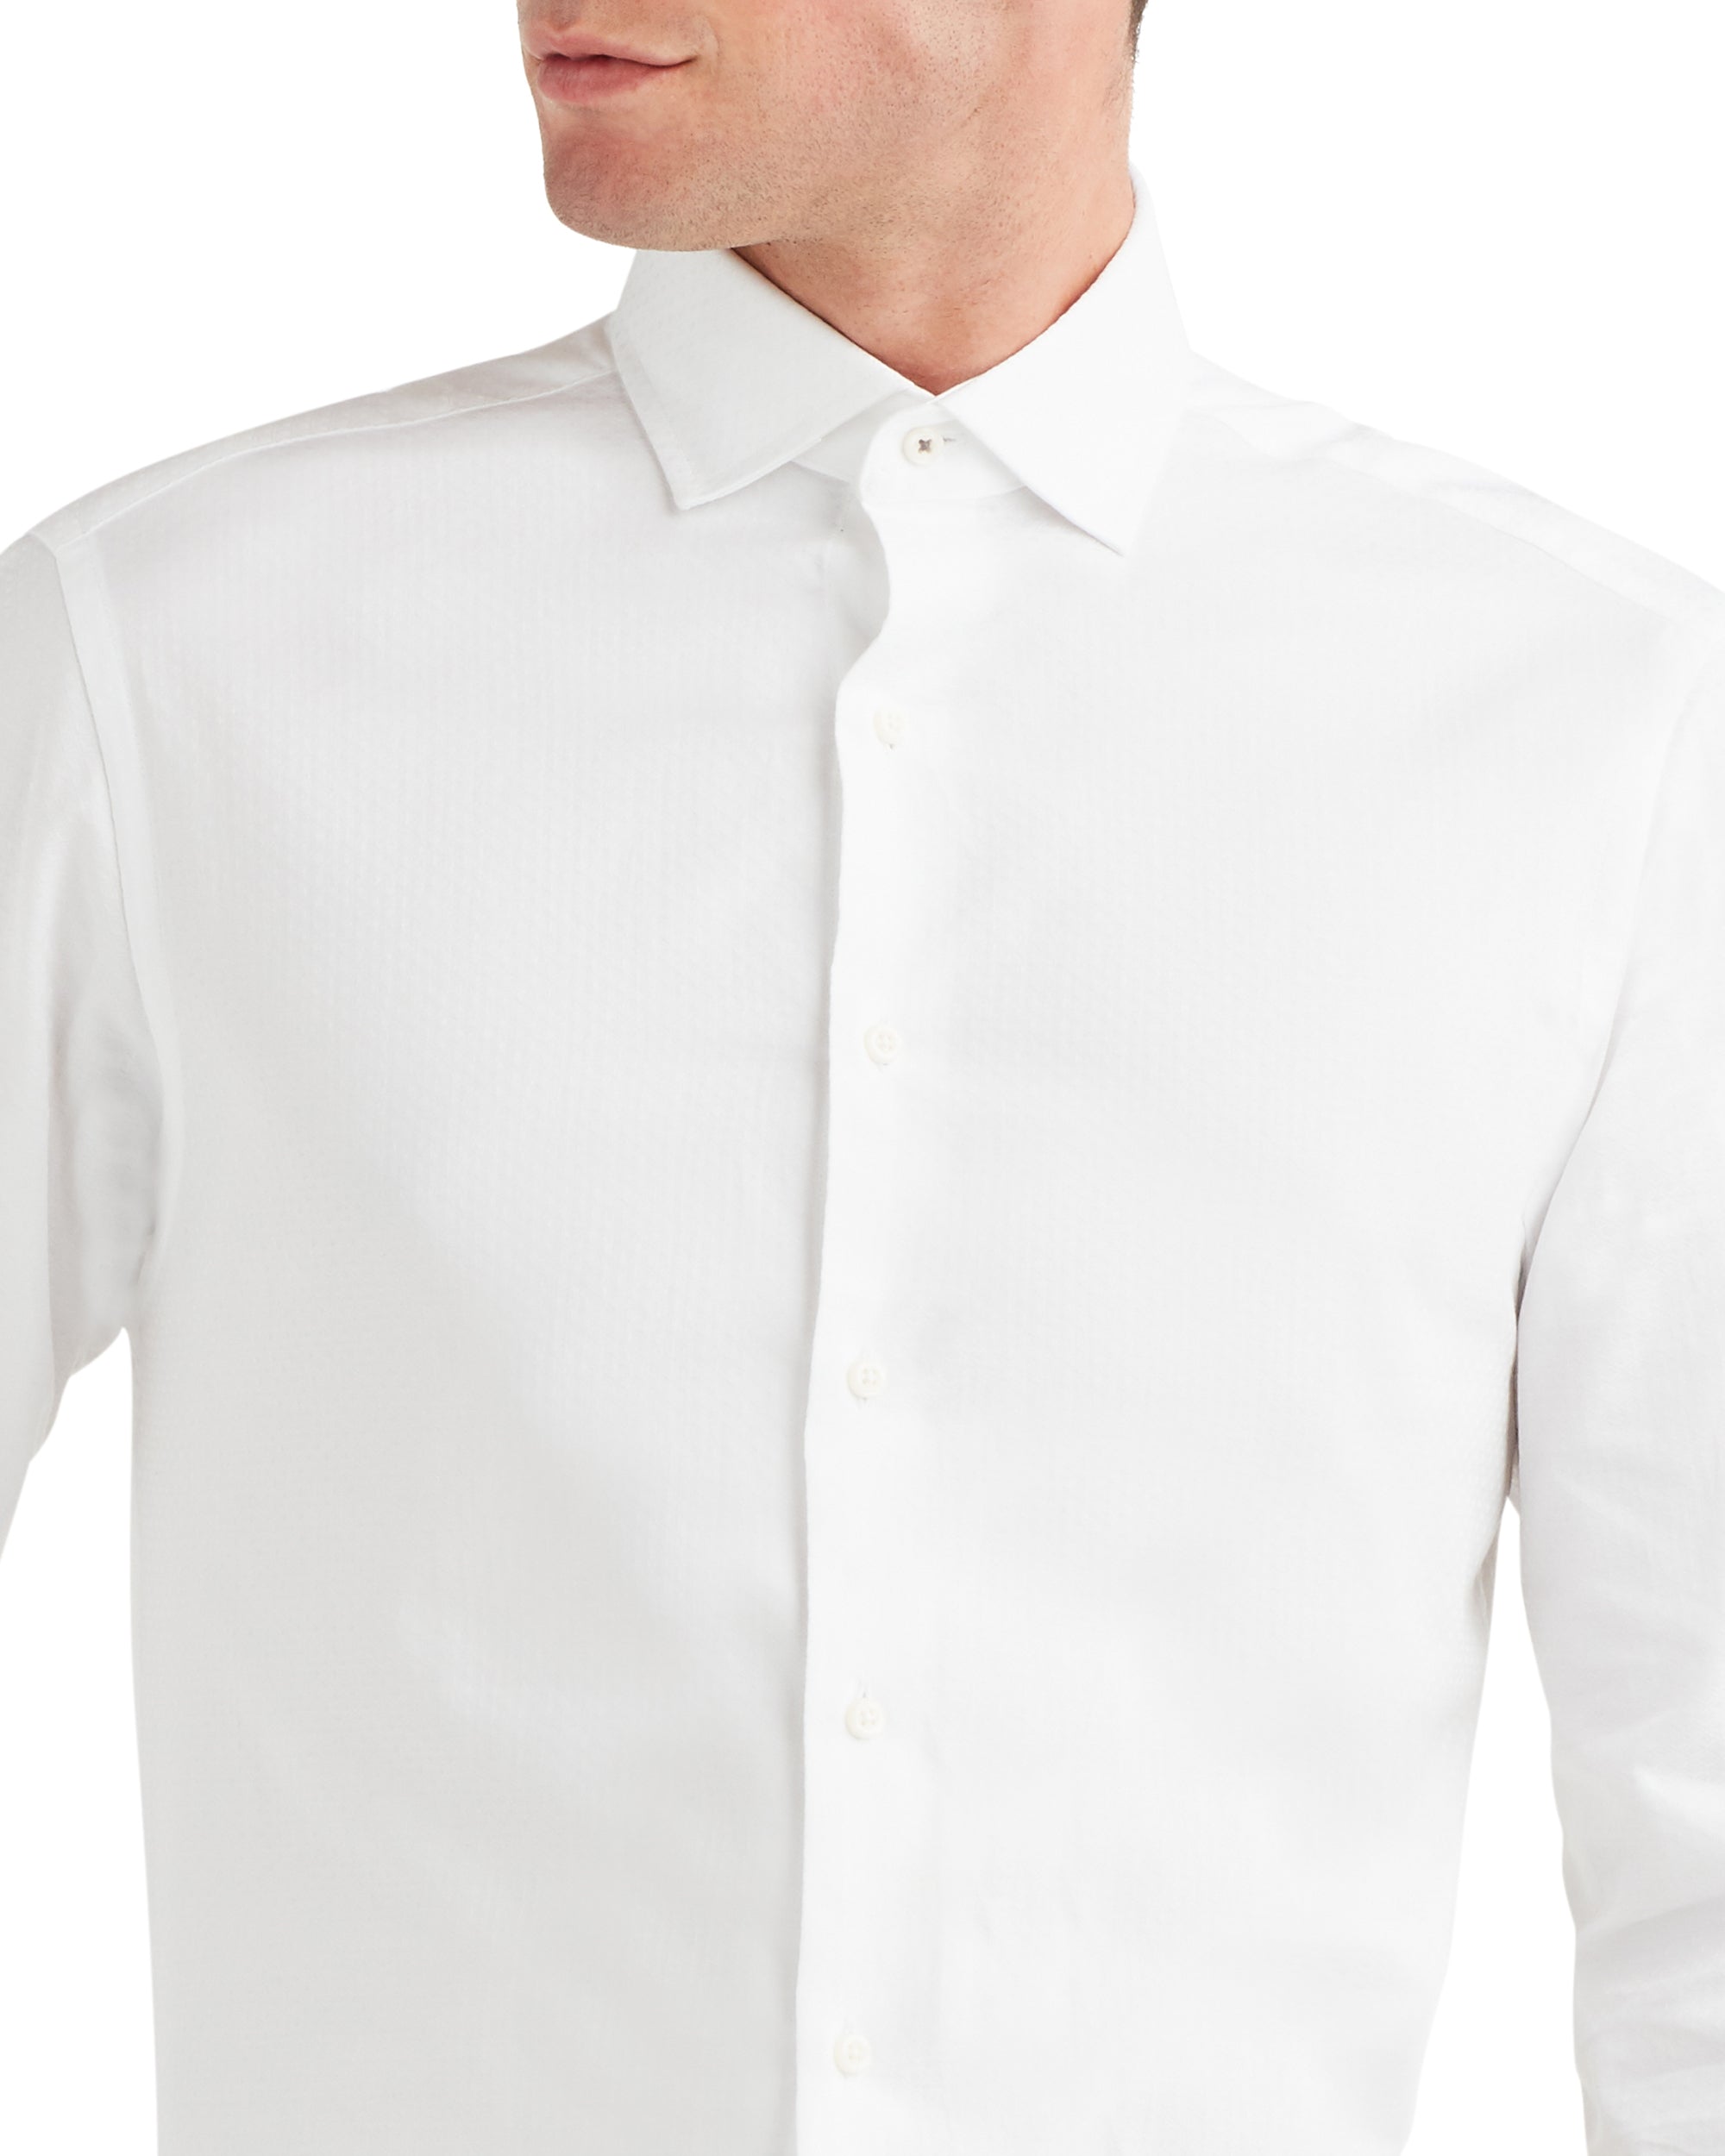 white dress up shirt